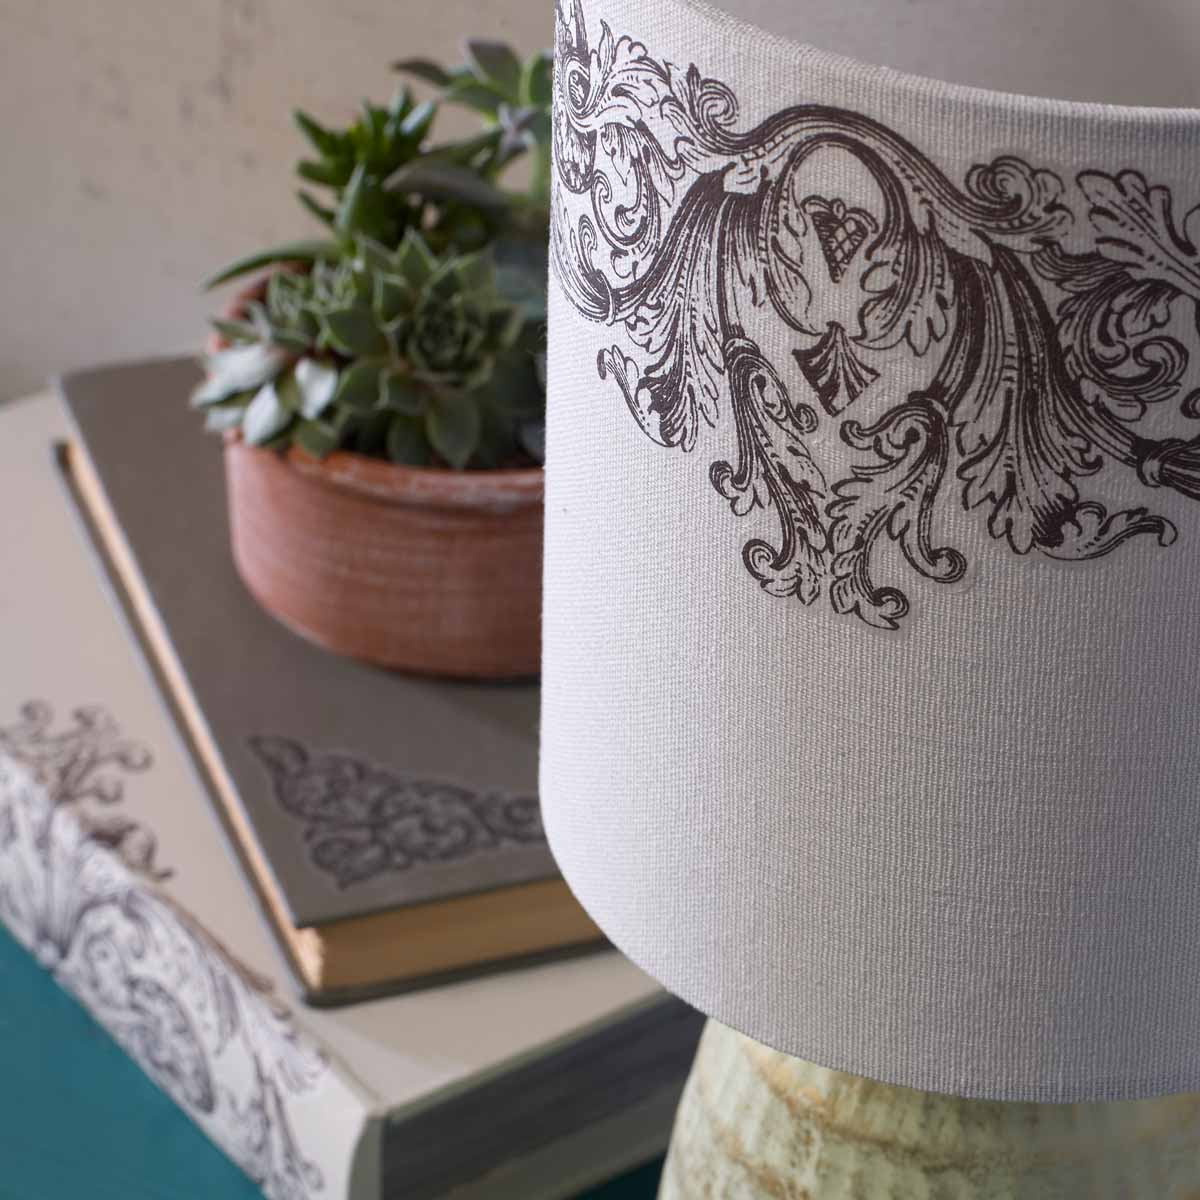 Ornate Lamp, Books, and Garden Pot 